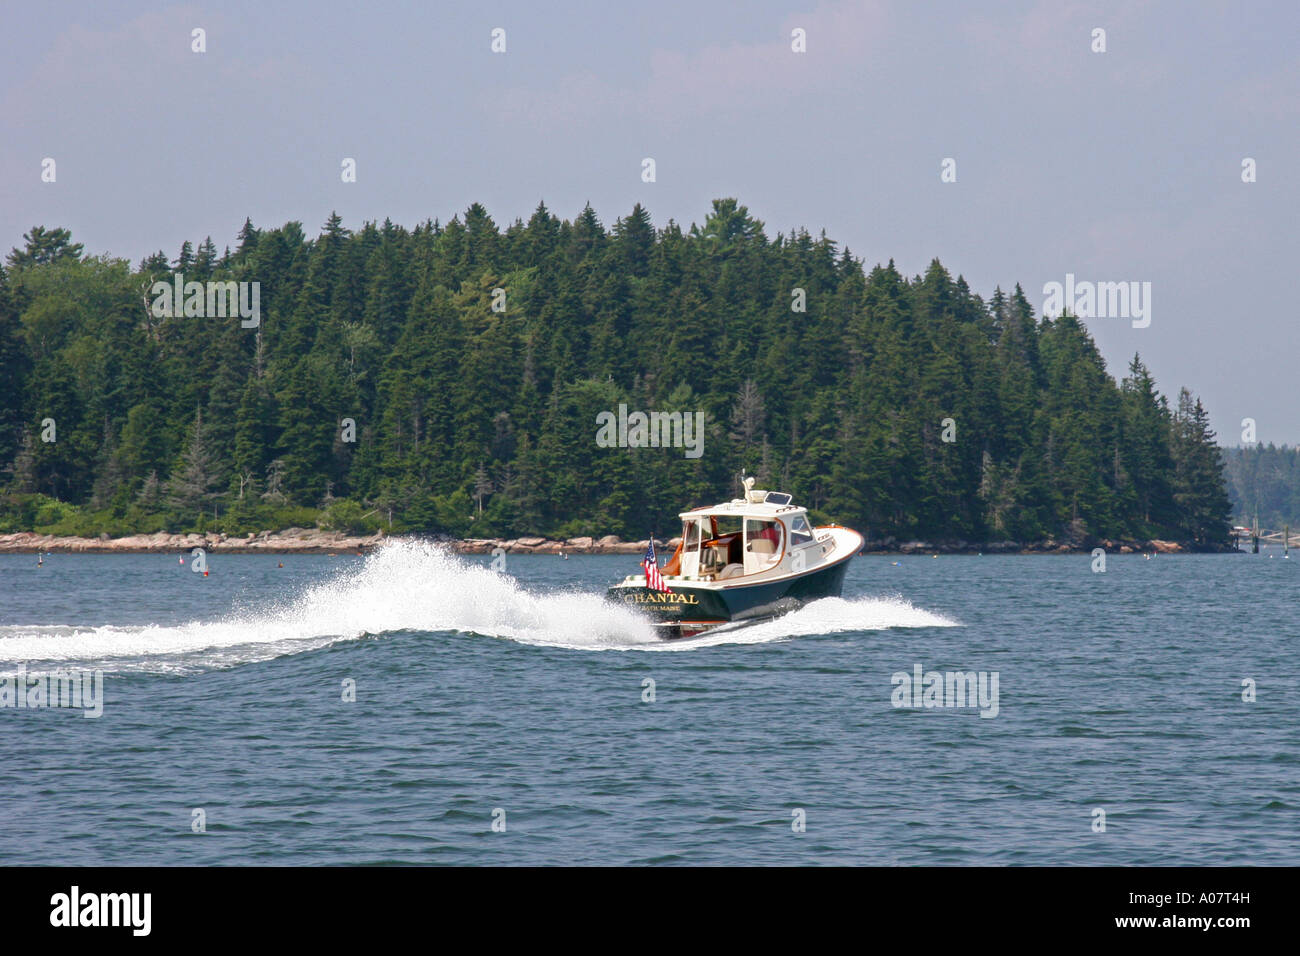 The small motoryacht CHANTAL underway at Ebenecook Harbor, Southport Island, Maine Stock Photo